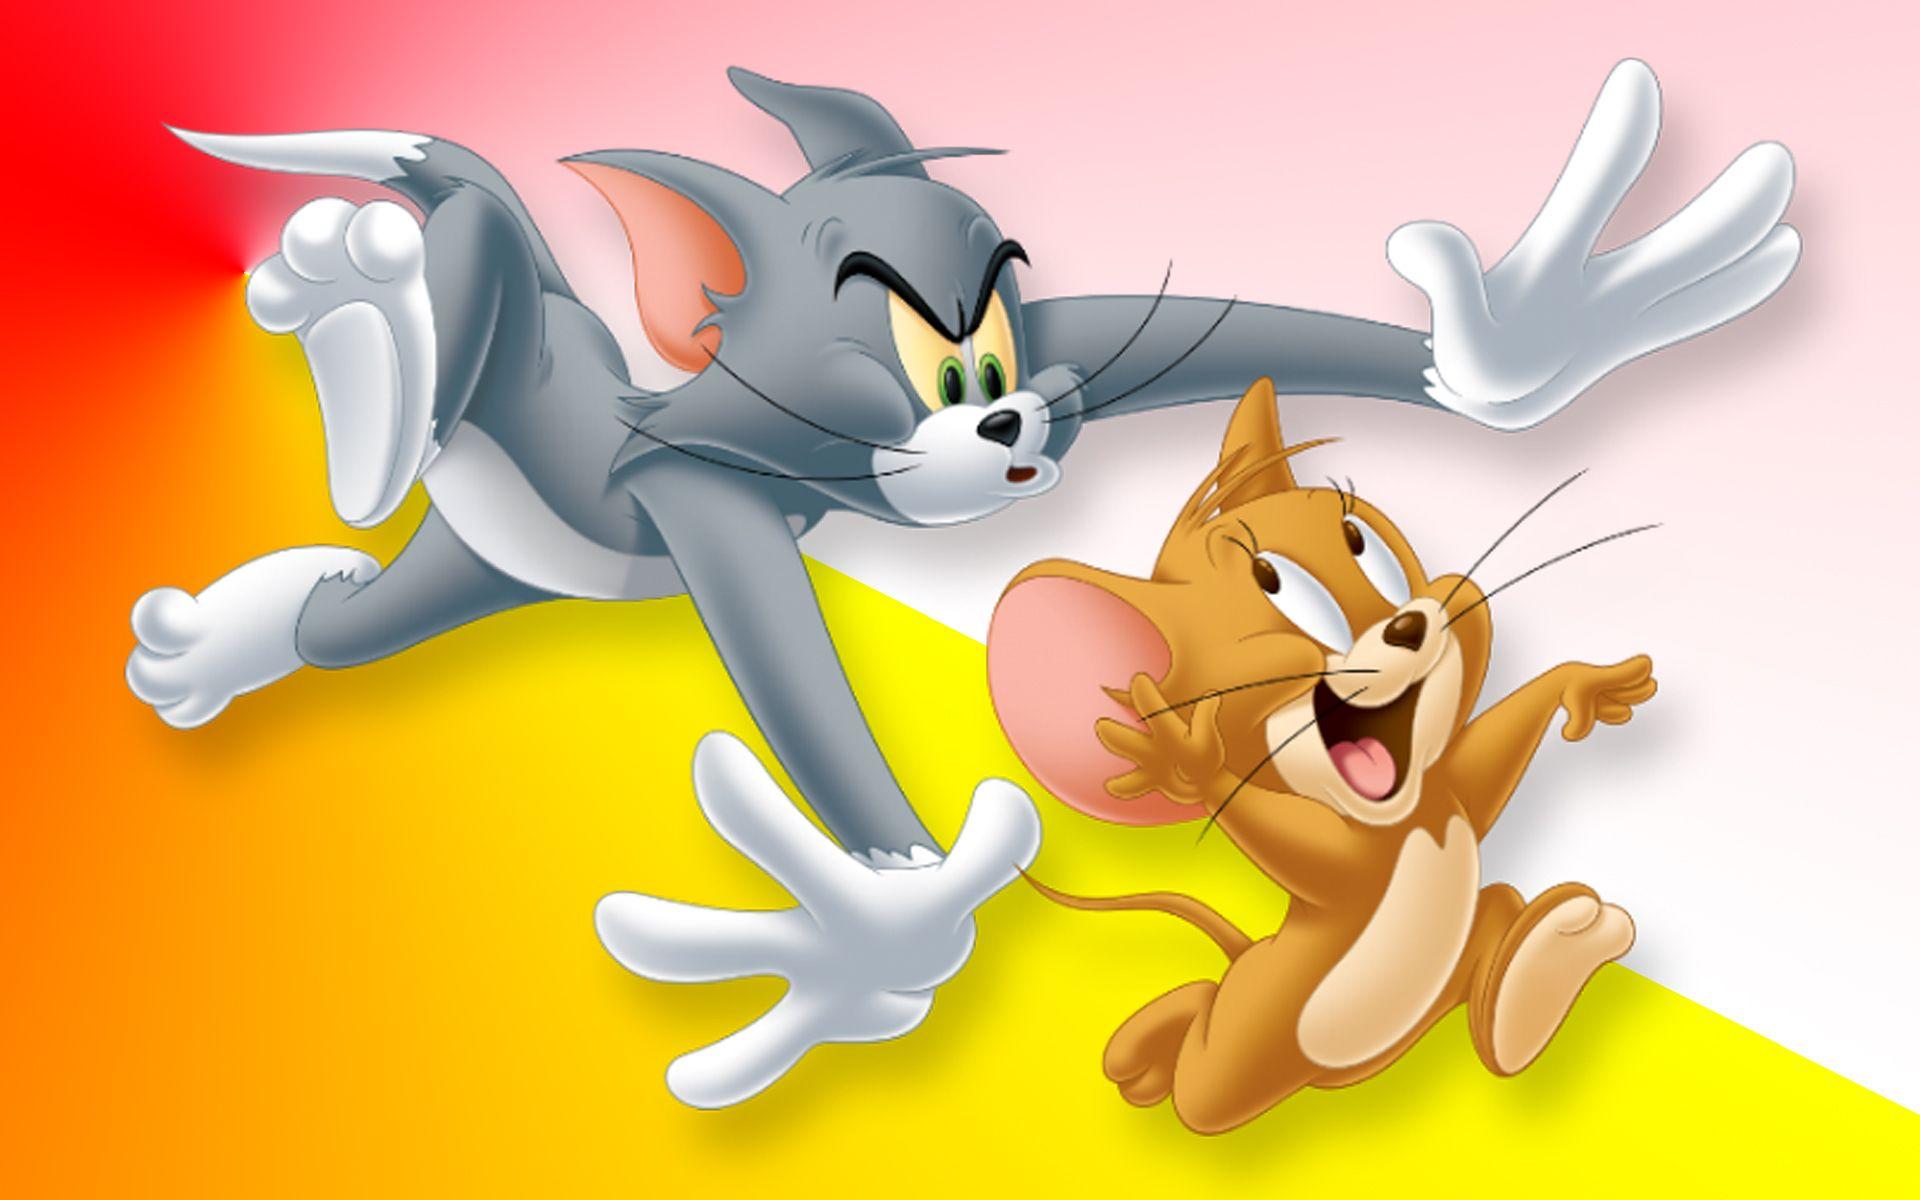 Tom and Jerry Wallpaper, Wallpaper13.com